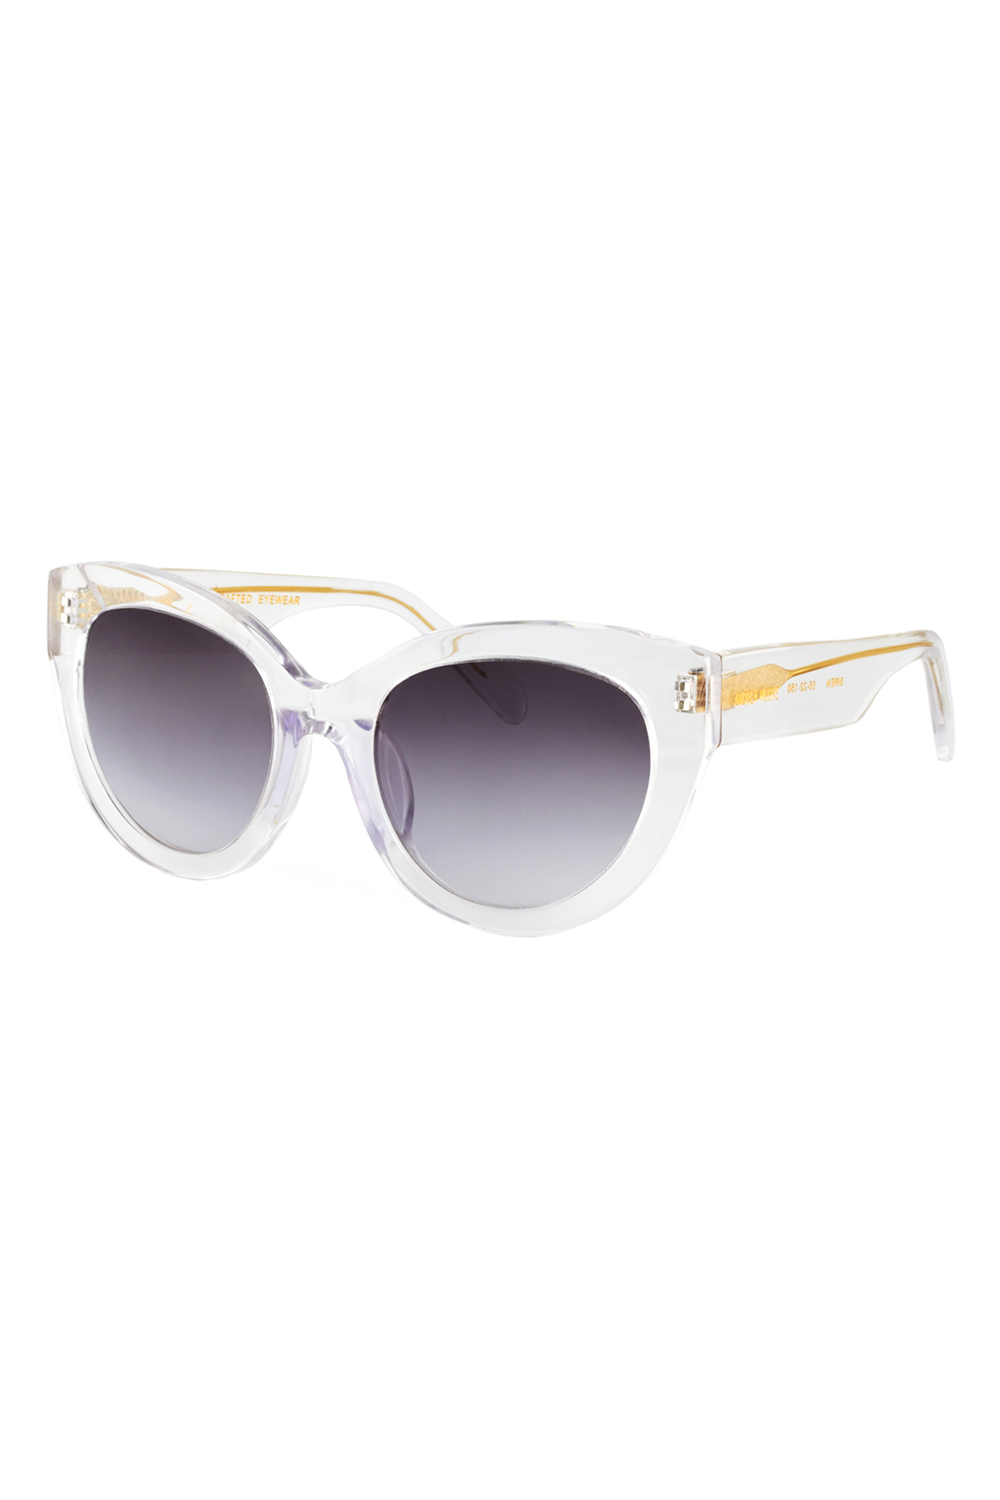 Andrea Moore sunglasses, $379